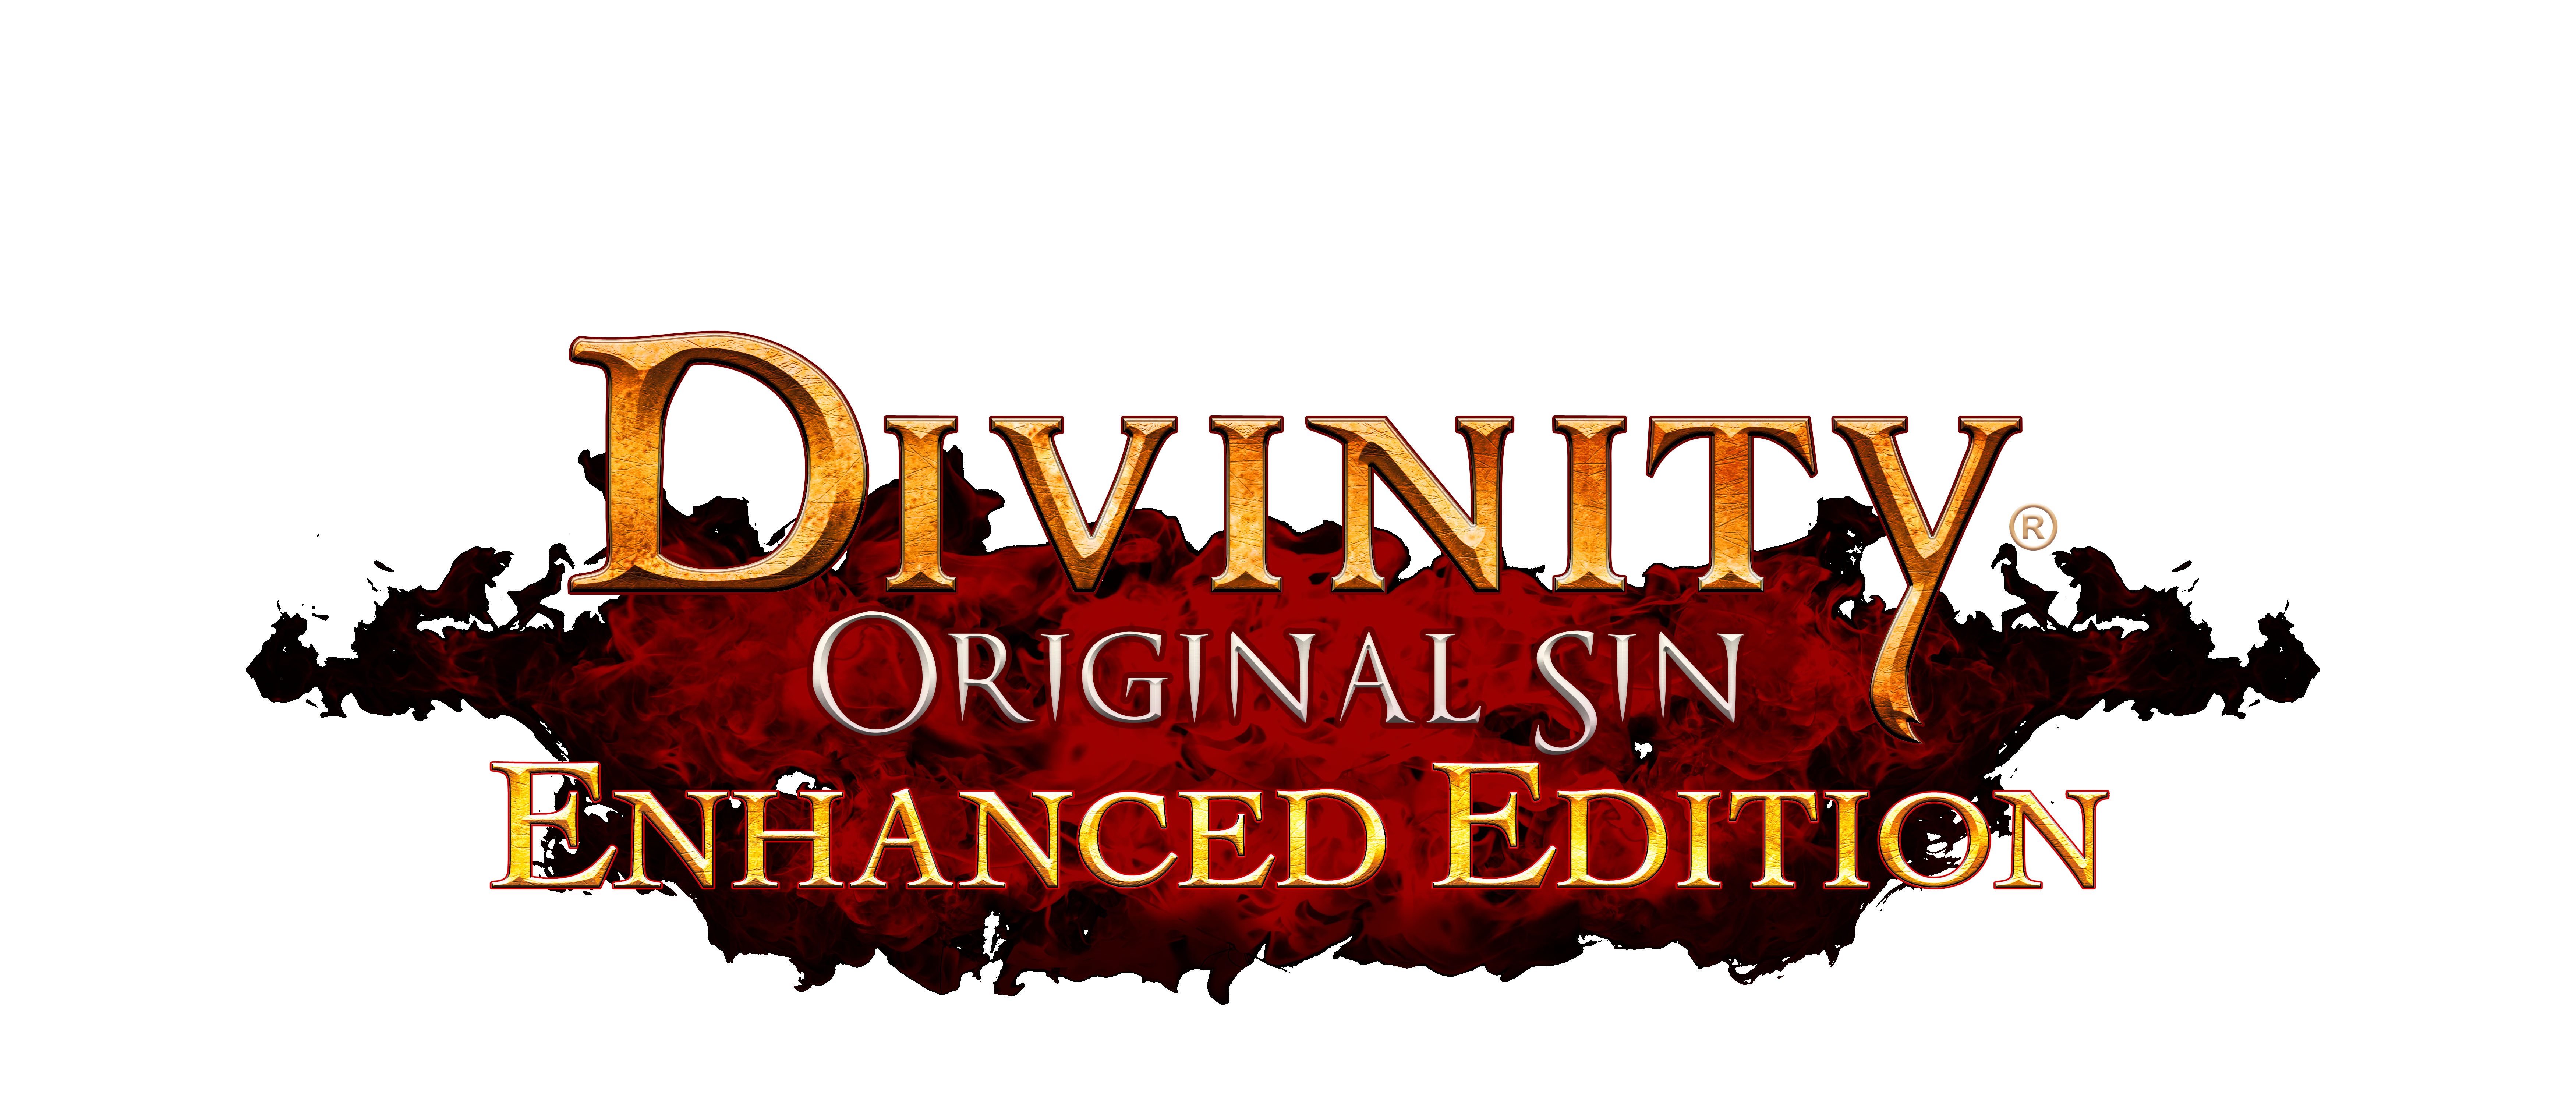 Divinity Original Sin Dock Ic